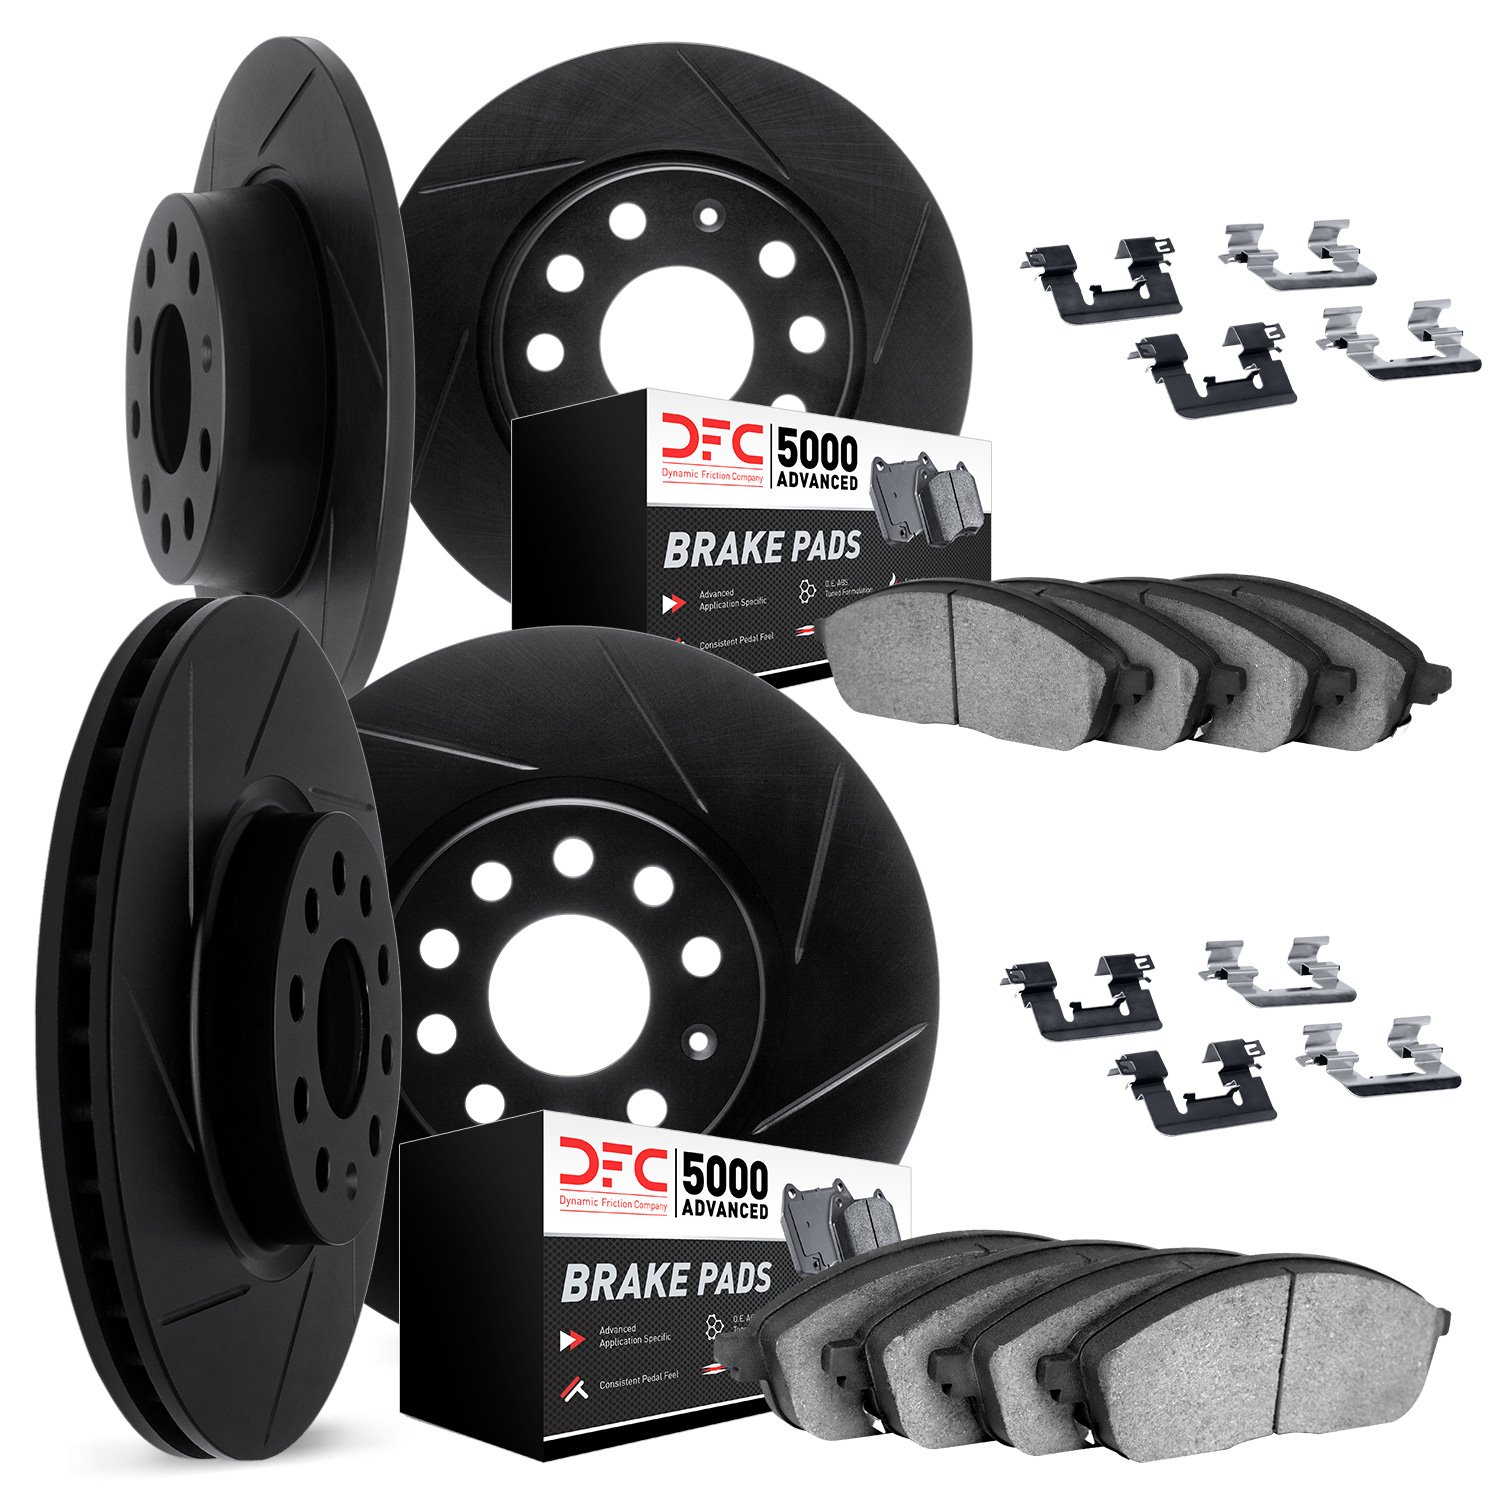 3514-42004 Slotted Brake Rotors w/5000 Advanced Brake Pads Kit & Hardware [Black], 1999-2002 Mopar, Position: Front and Rear